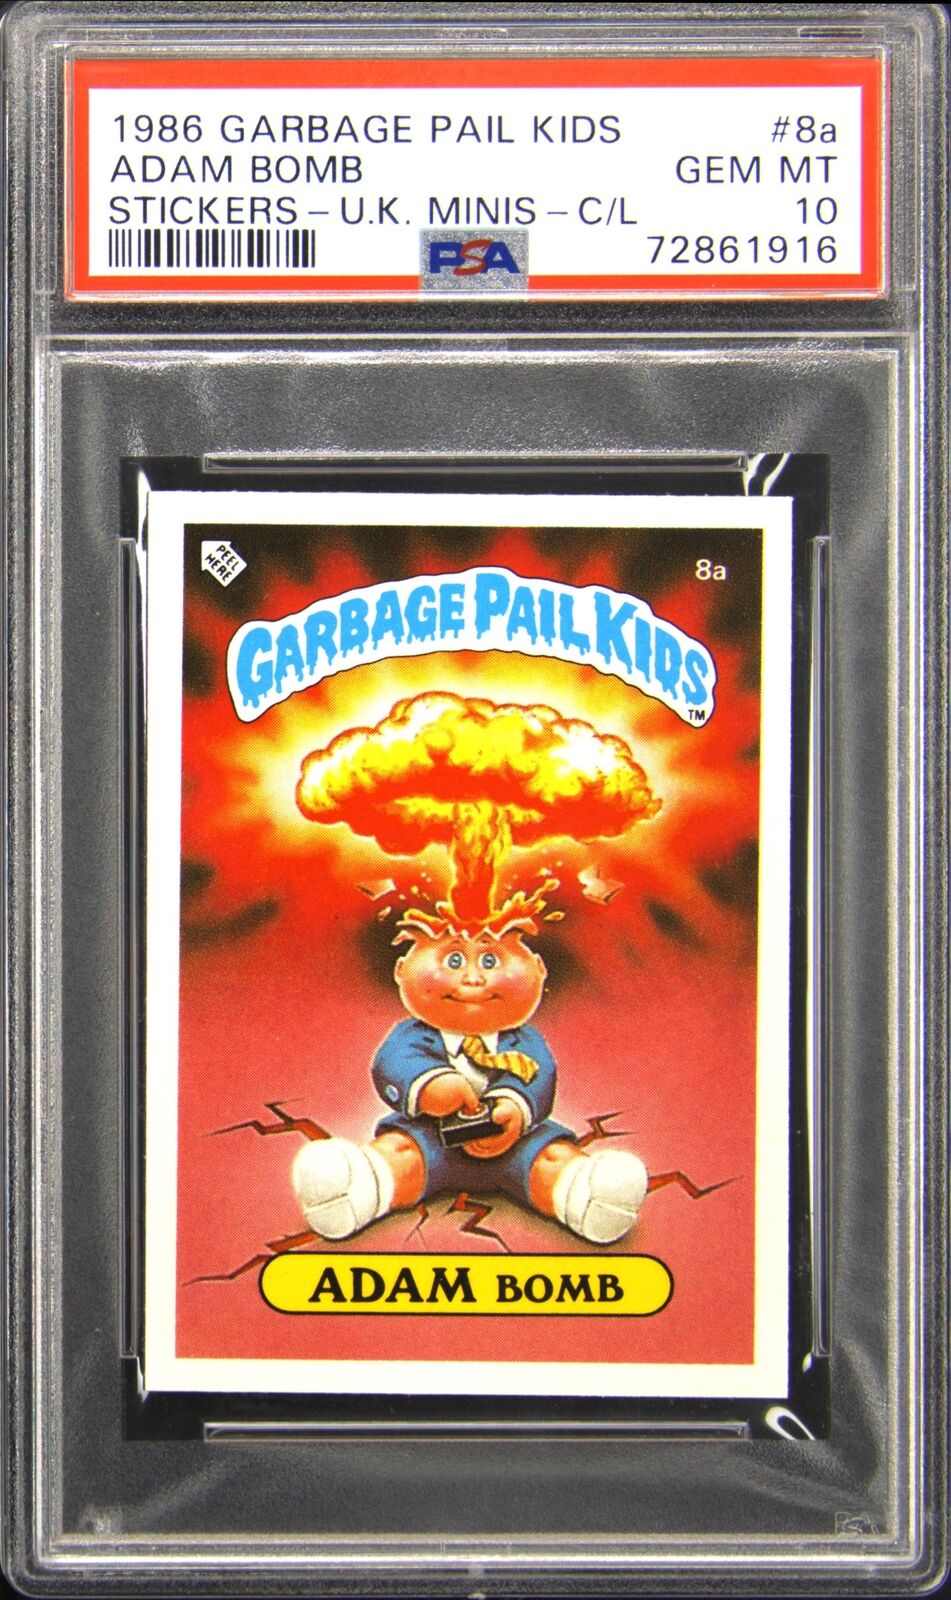 1986 Garbage Pail Kids Stickers U.K. Minis 8a Adam Bomb Checklist PSA 10